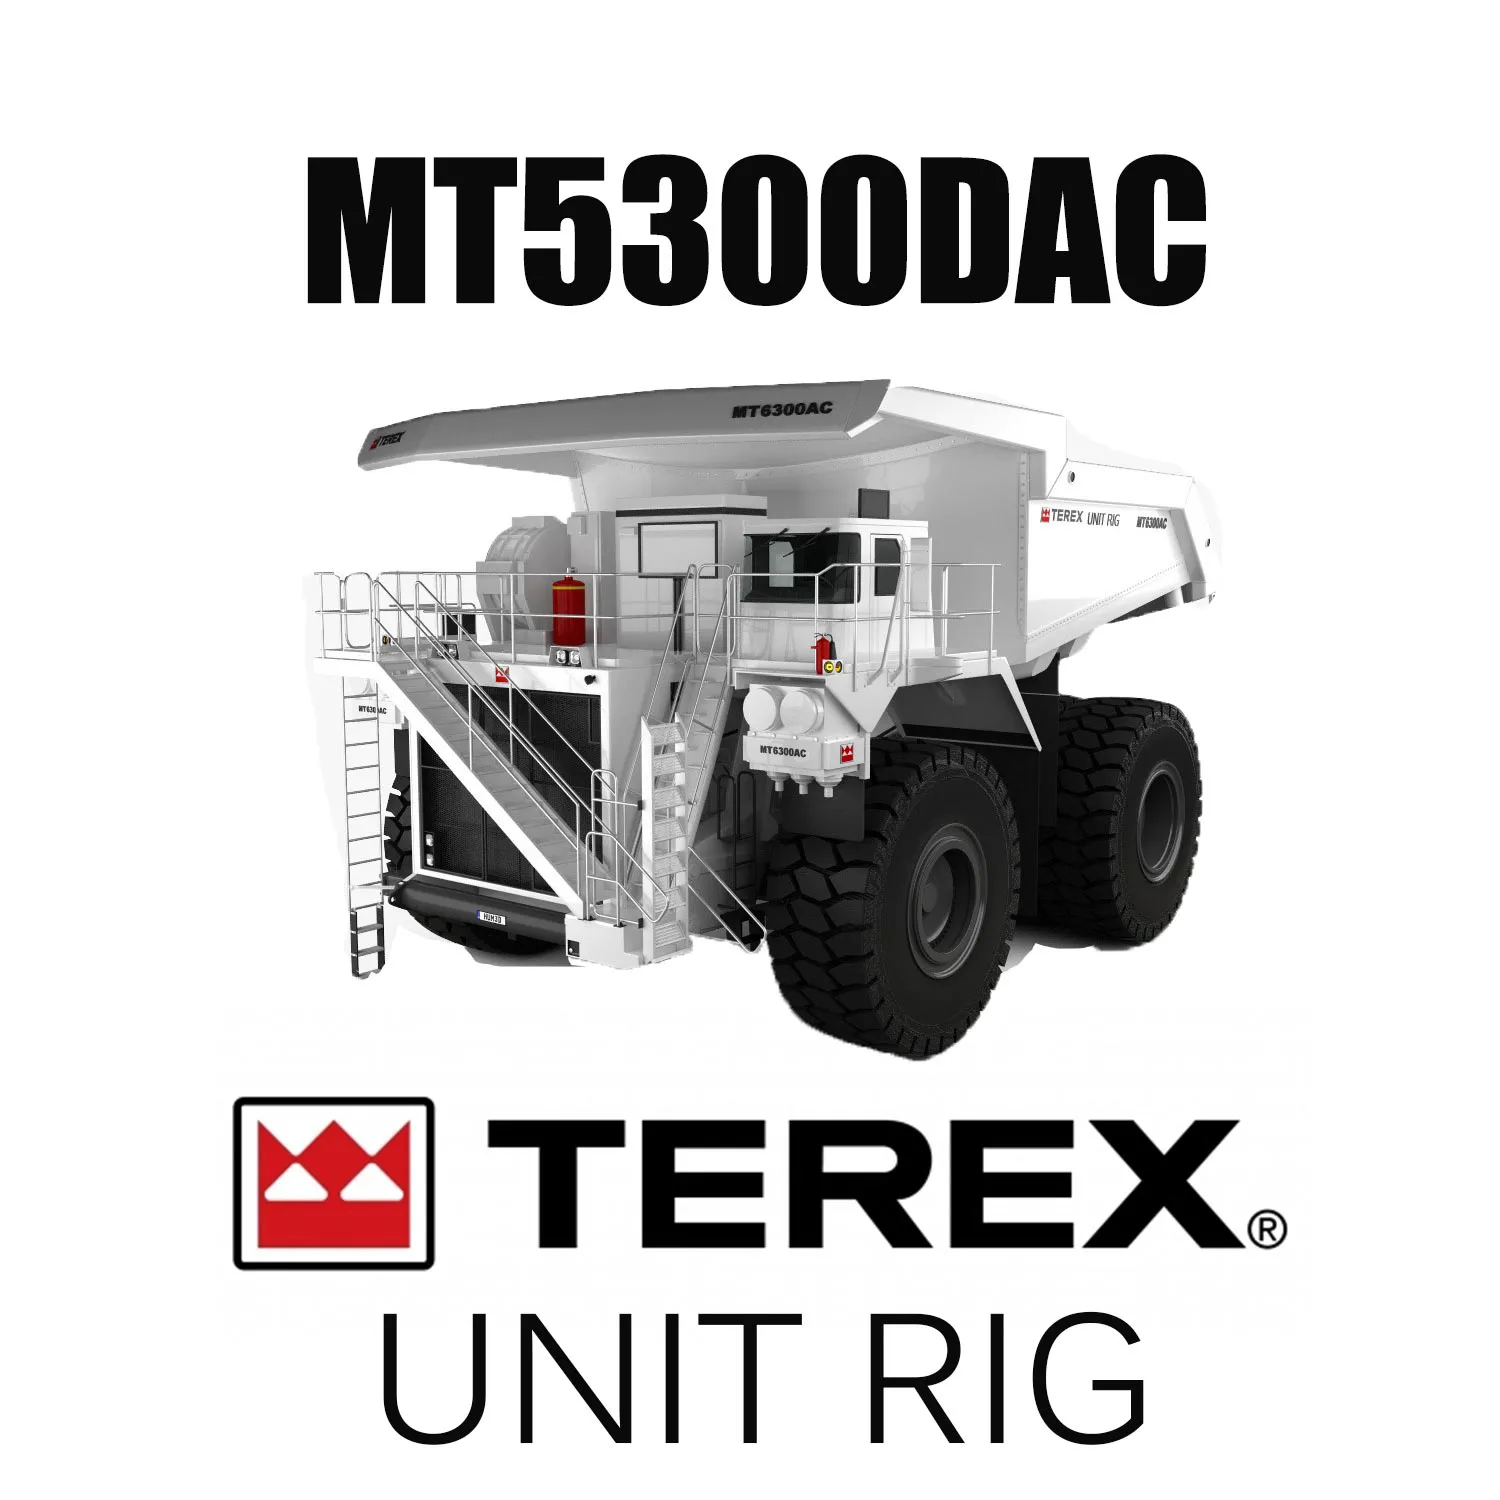 Giant 63-inch Earthmover OTR Tires 53/80R63 for Mining Equipment UNIT RIG MT5300DAC